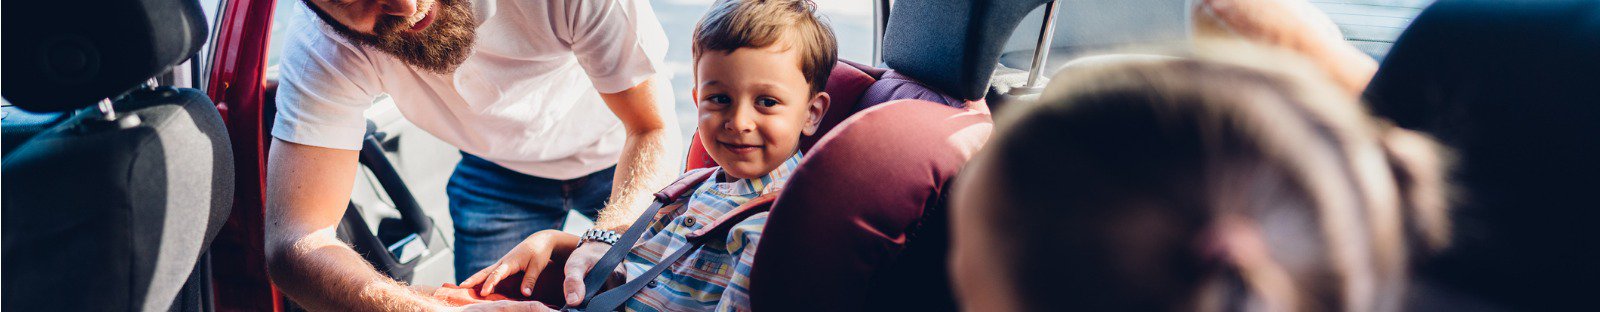 Man putting seatbelts on kids in car 